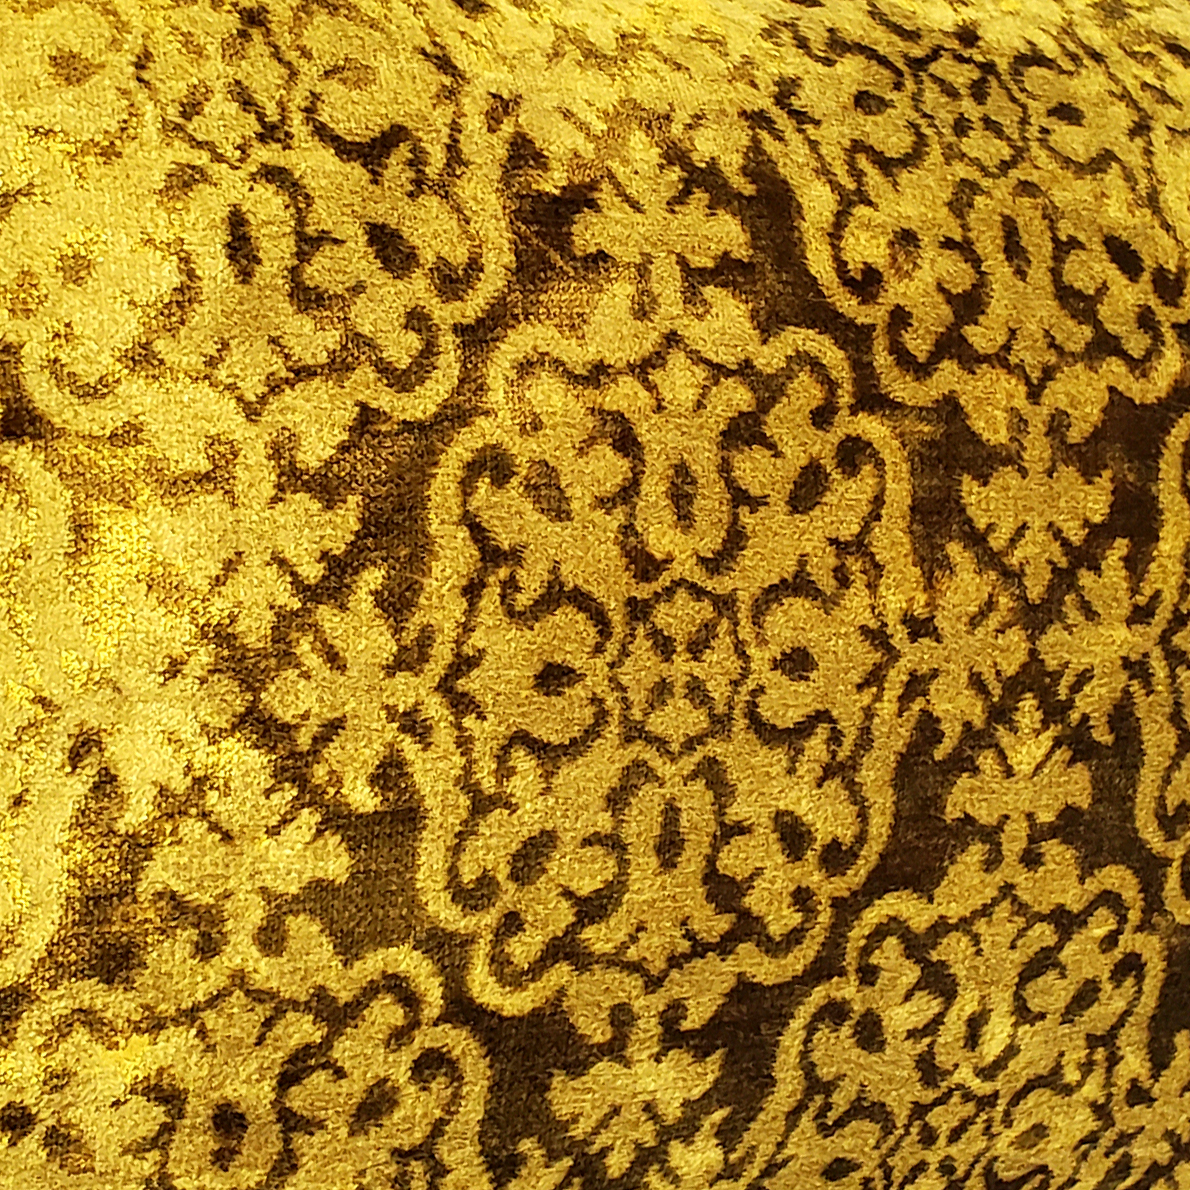 Artemis Gold Velvet Throw Pillow 12x20, With Polyfill Insert